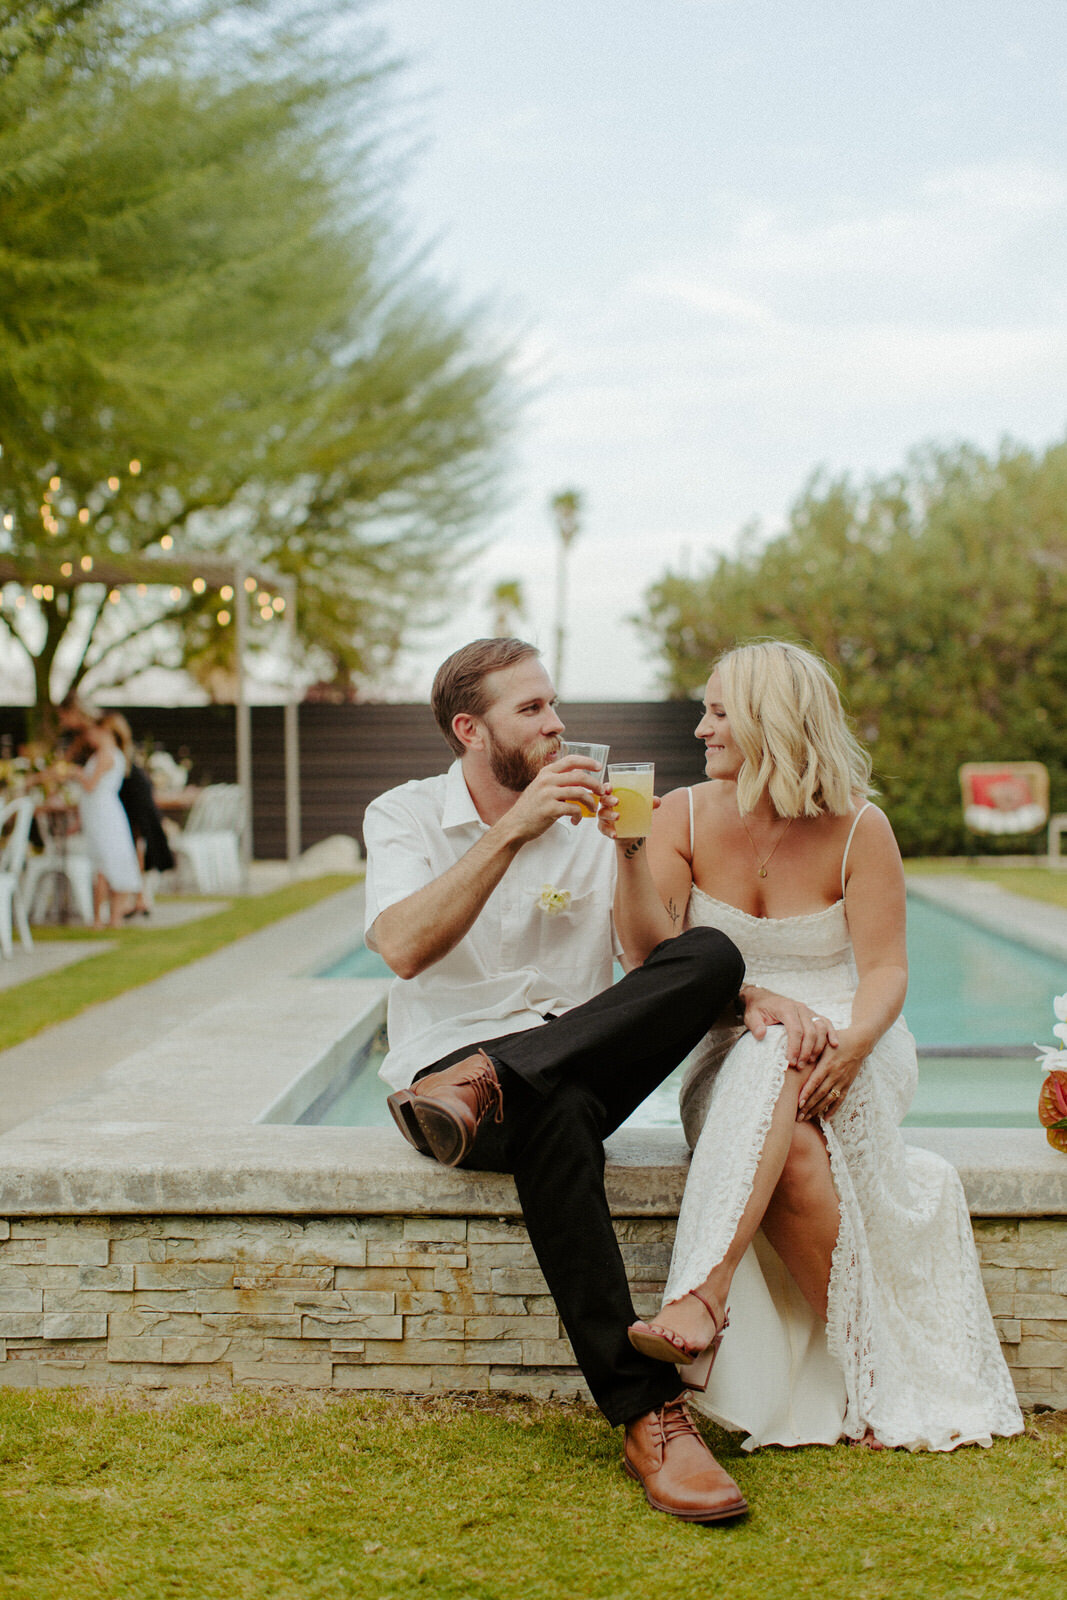 Brianna-Broyles-Photography-COVID-Backyard-Wedding-Palm-Springs-Reception-1.jpg